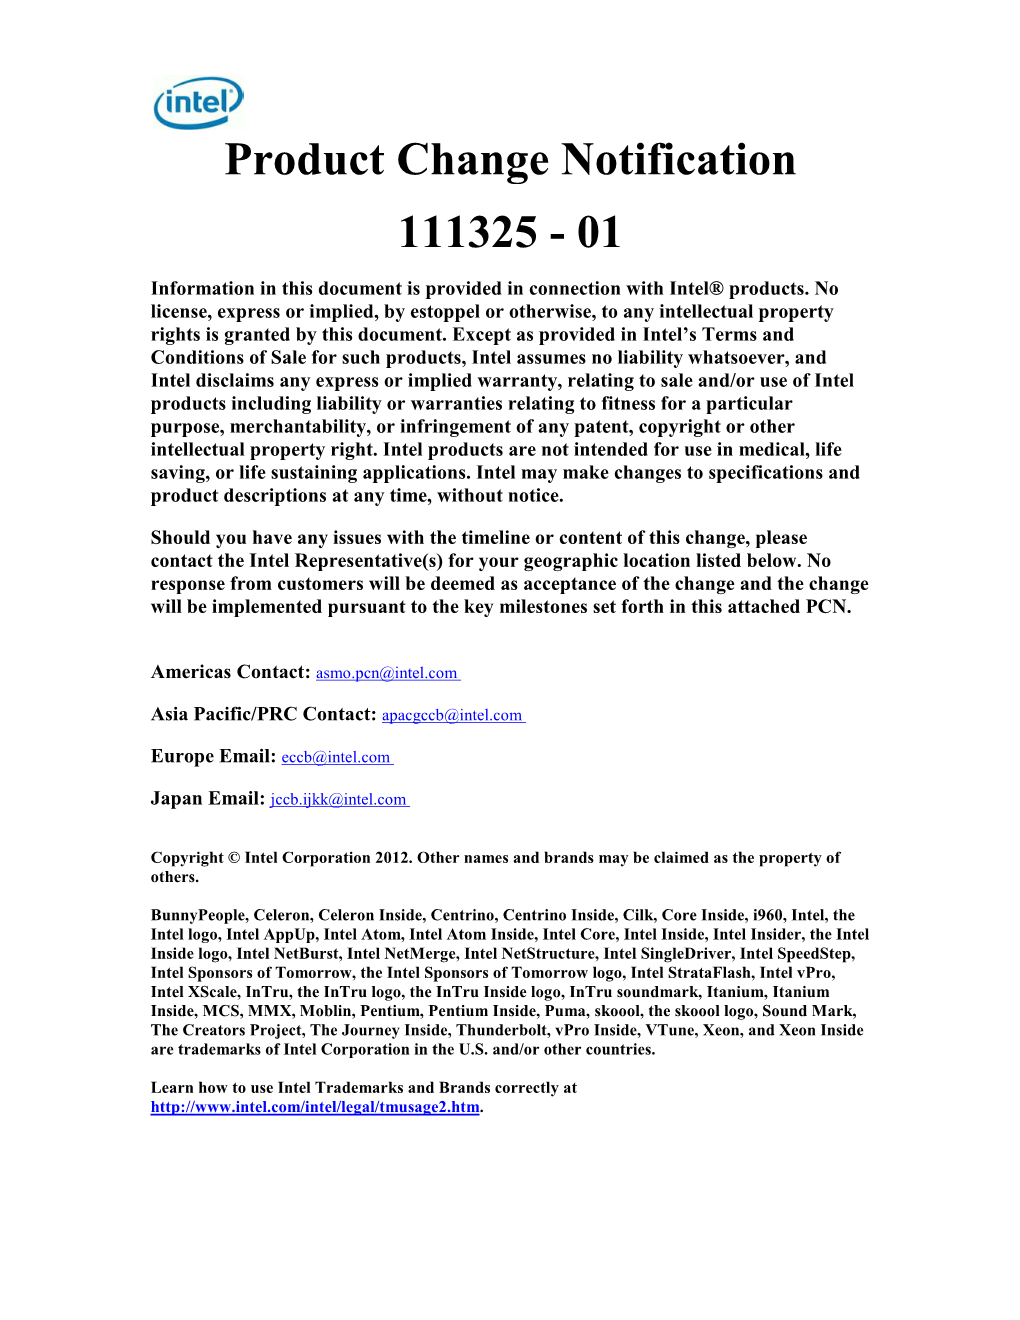 Product Change Notification 111325